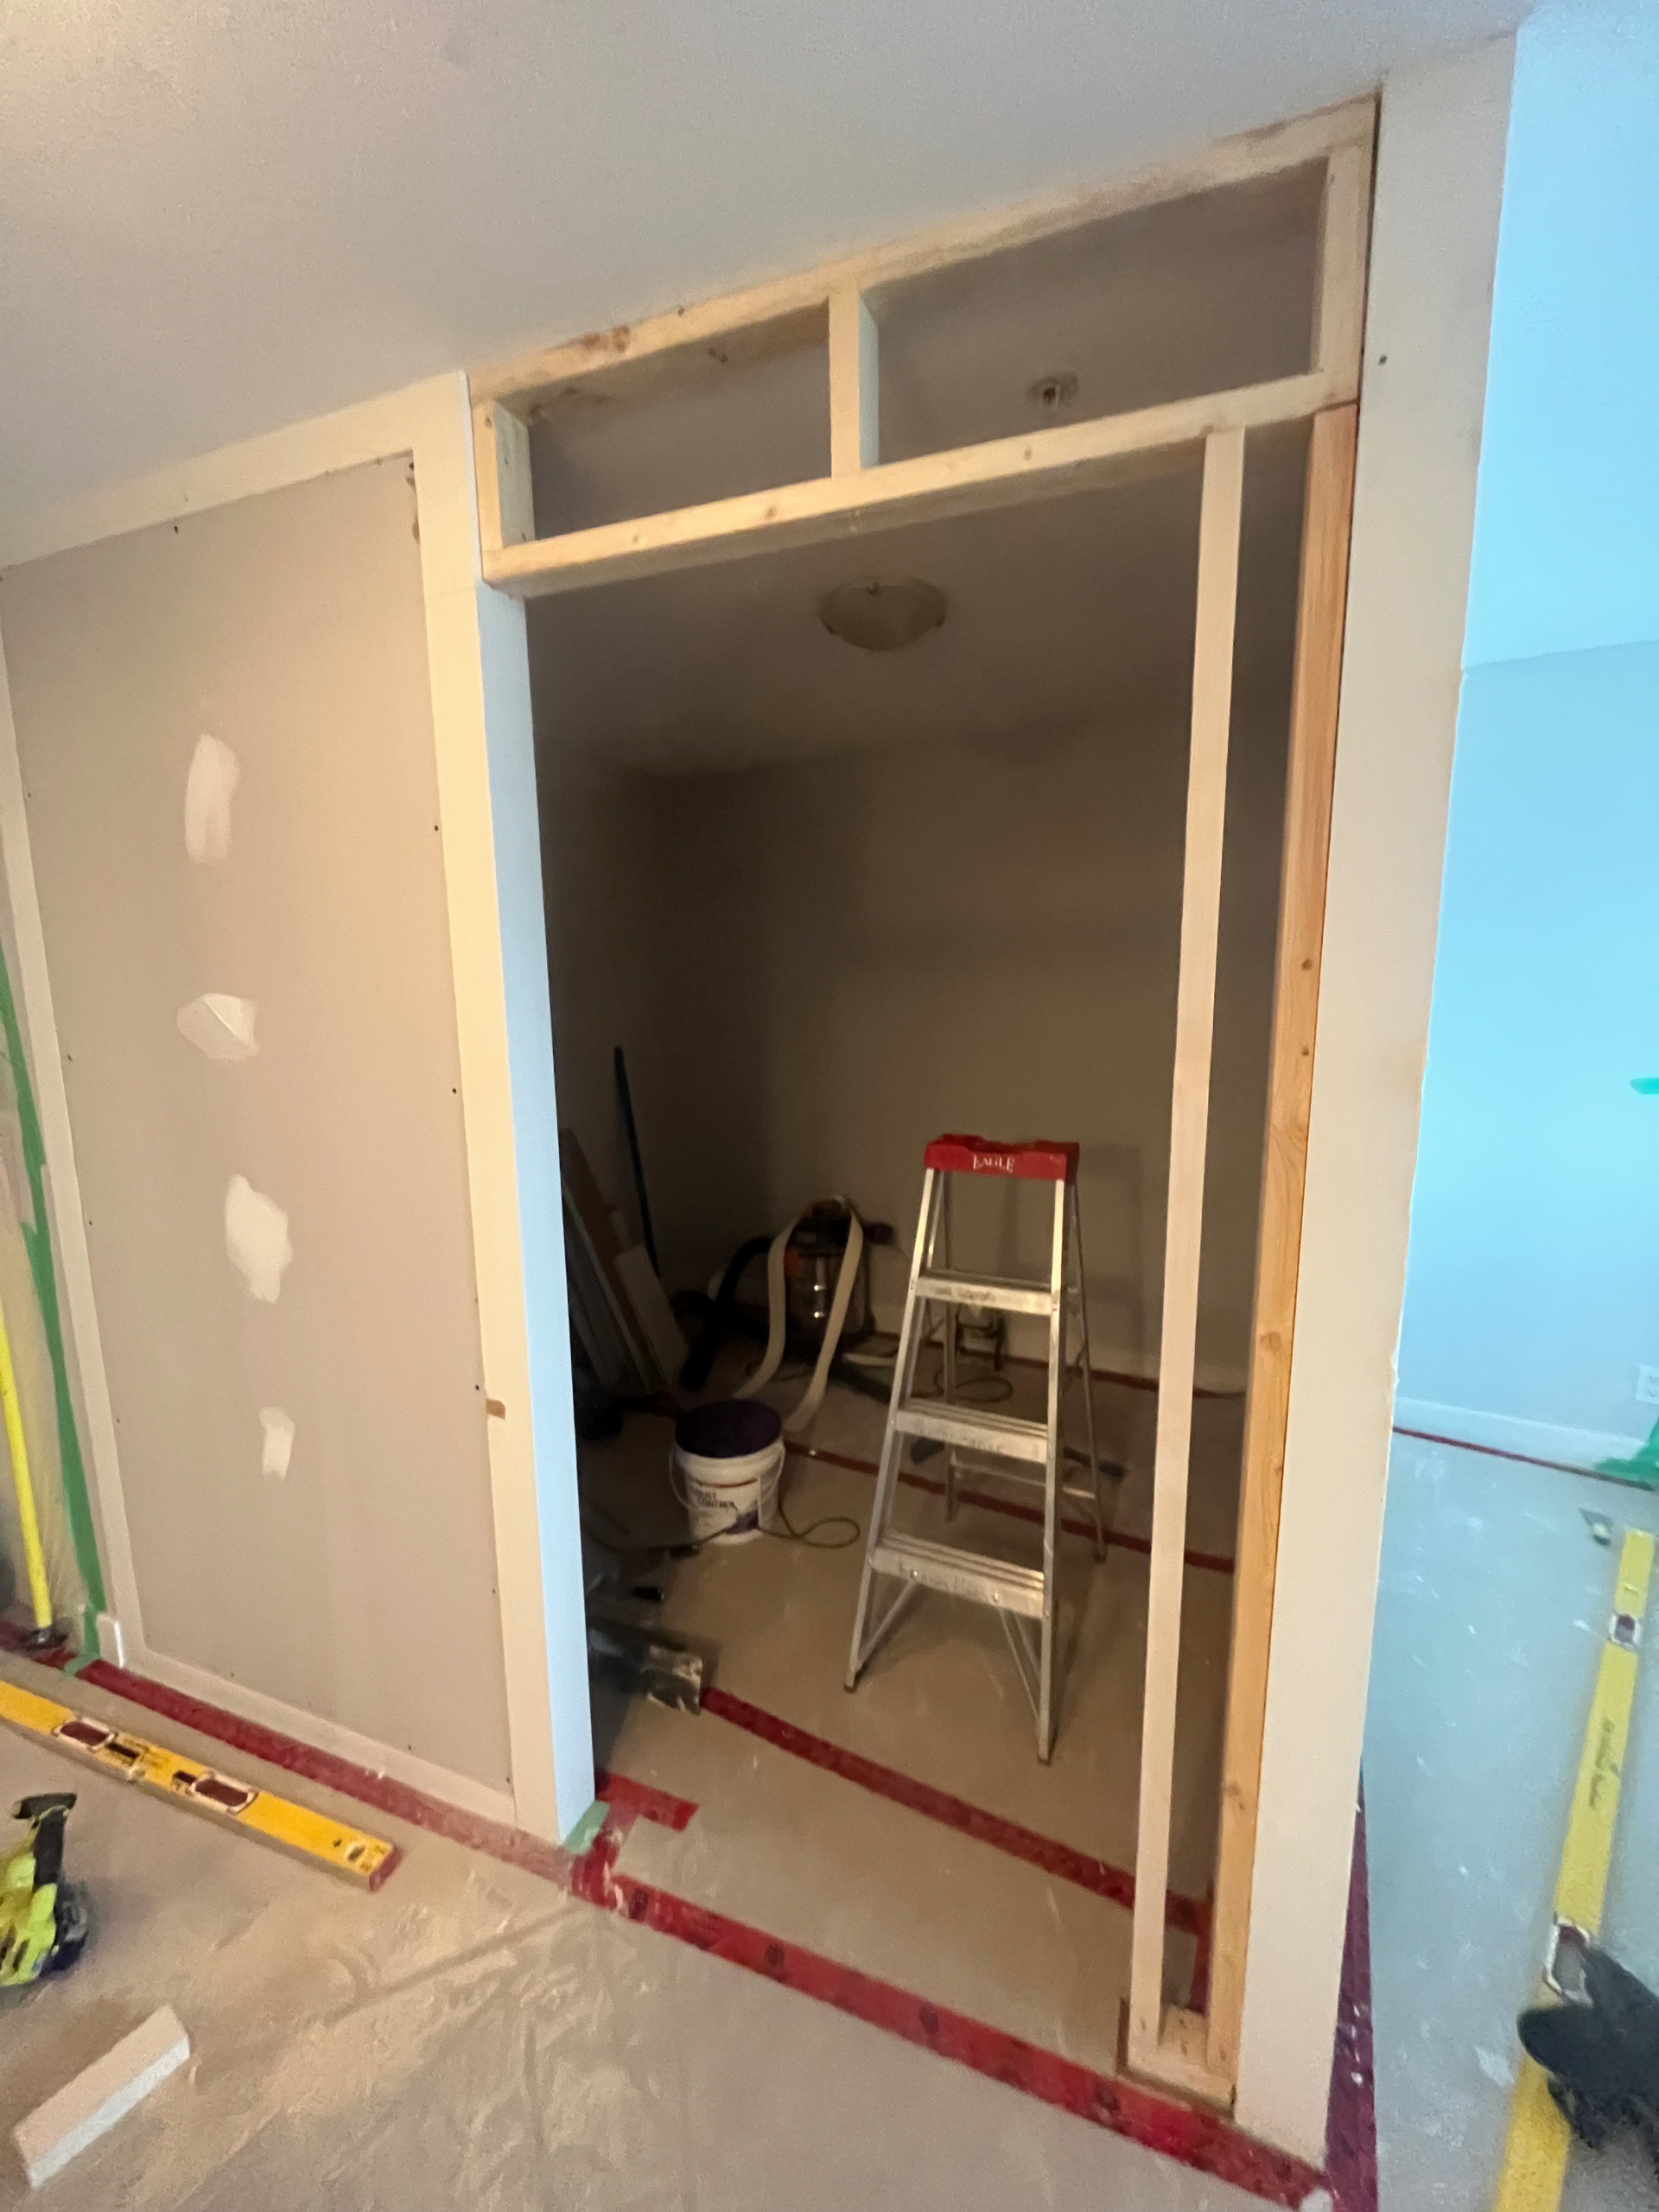 Glass wall removal/ Barn door install